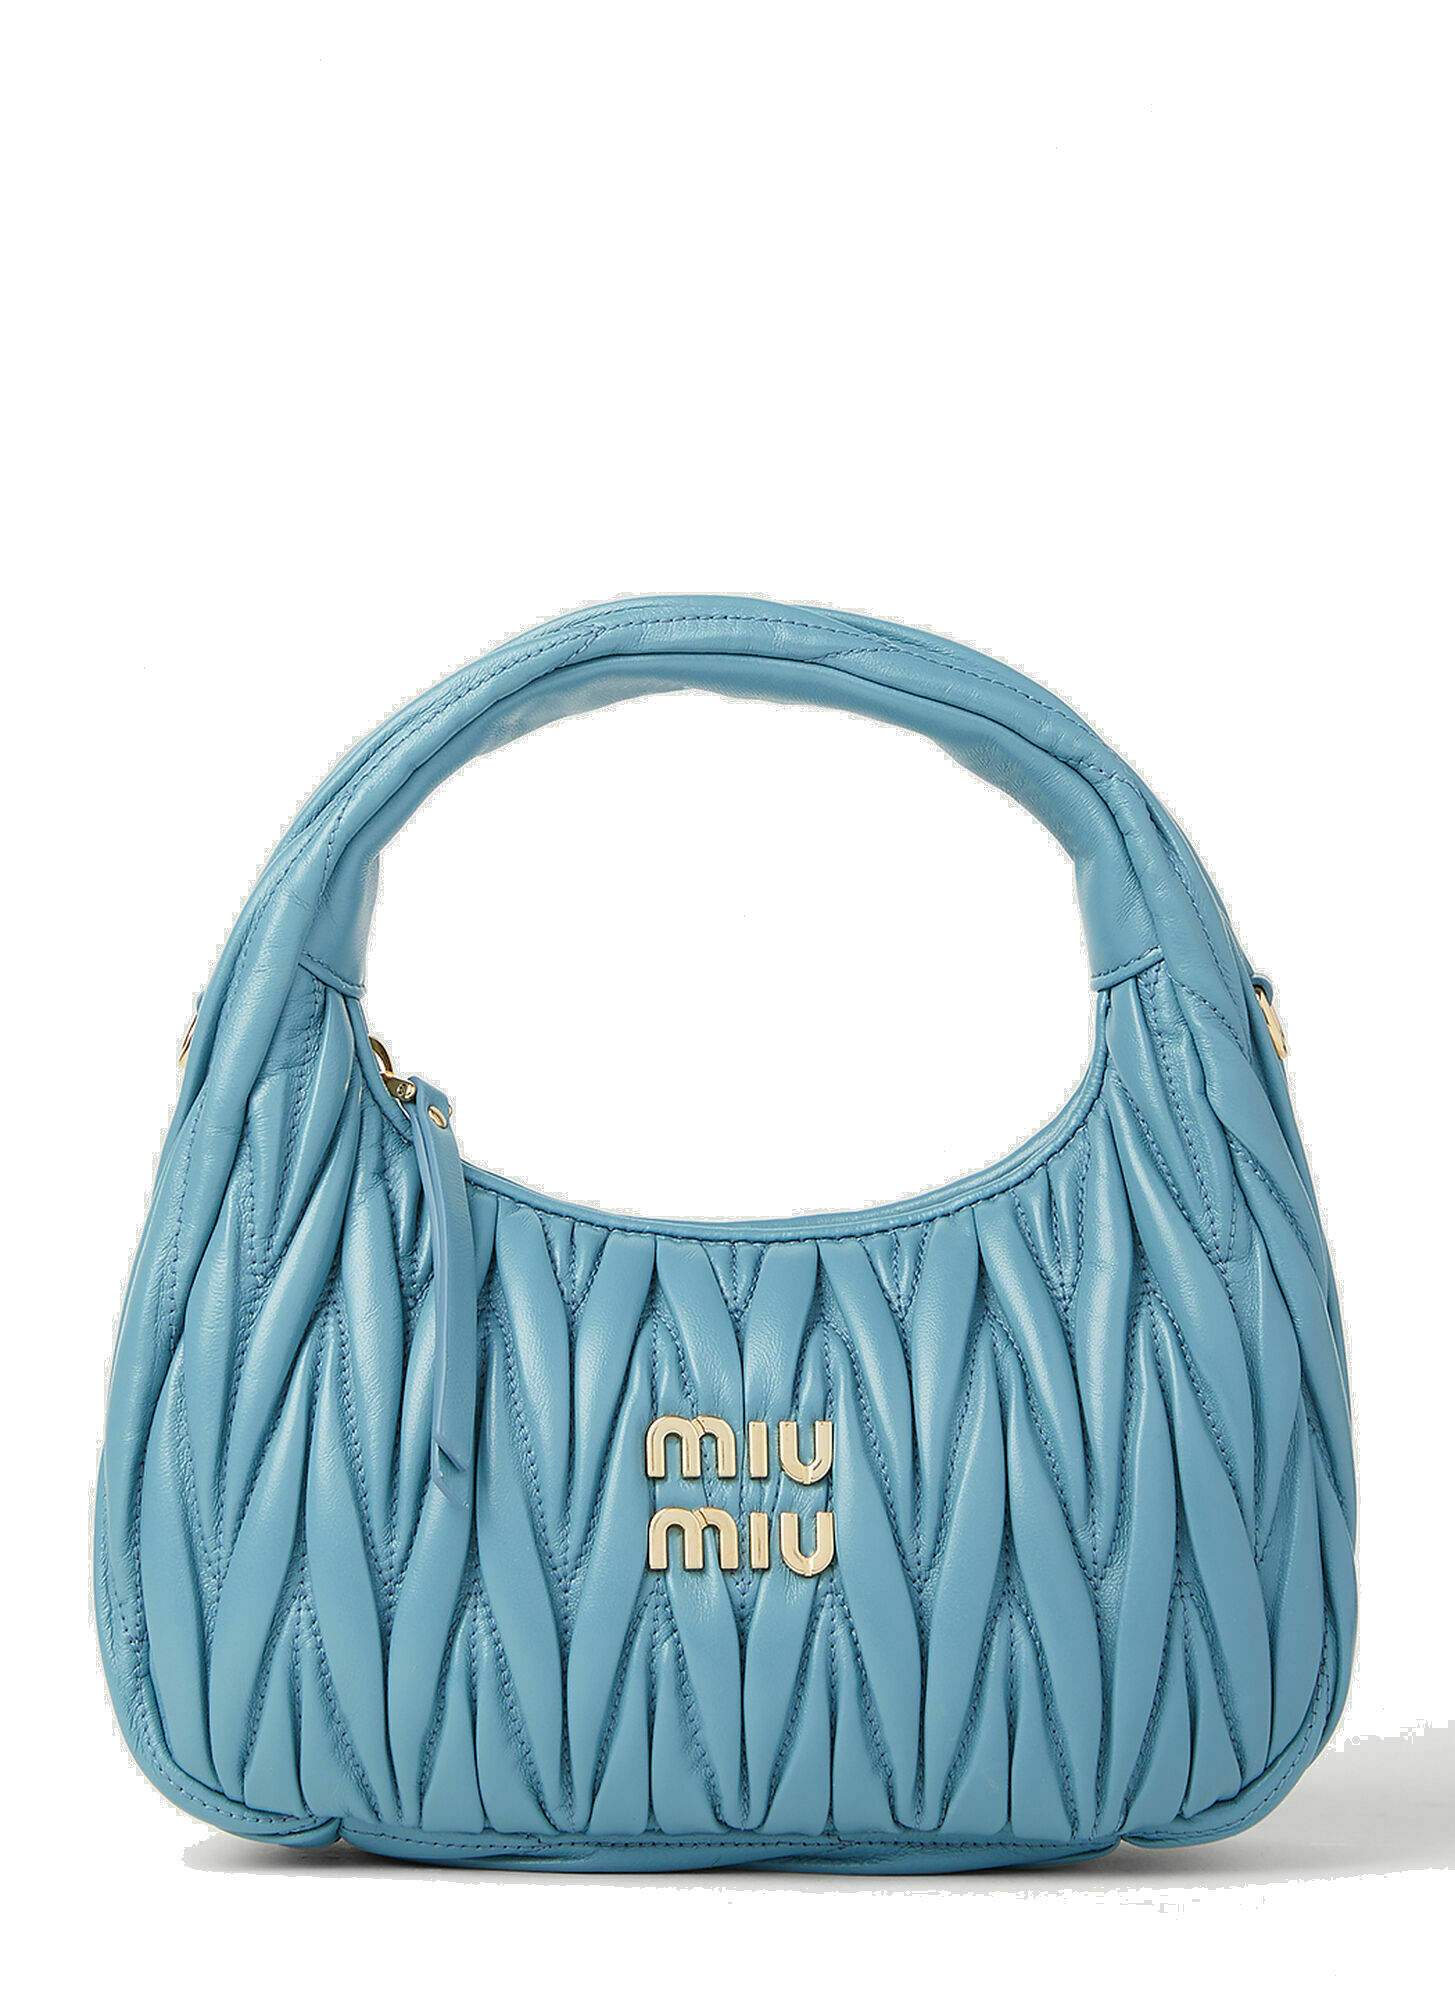 Miu Miu - Wander Matelassé Hobo Bag in Blue Miu Miu